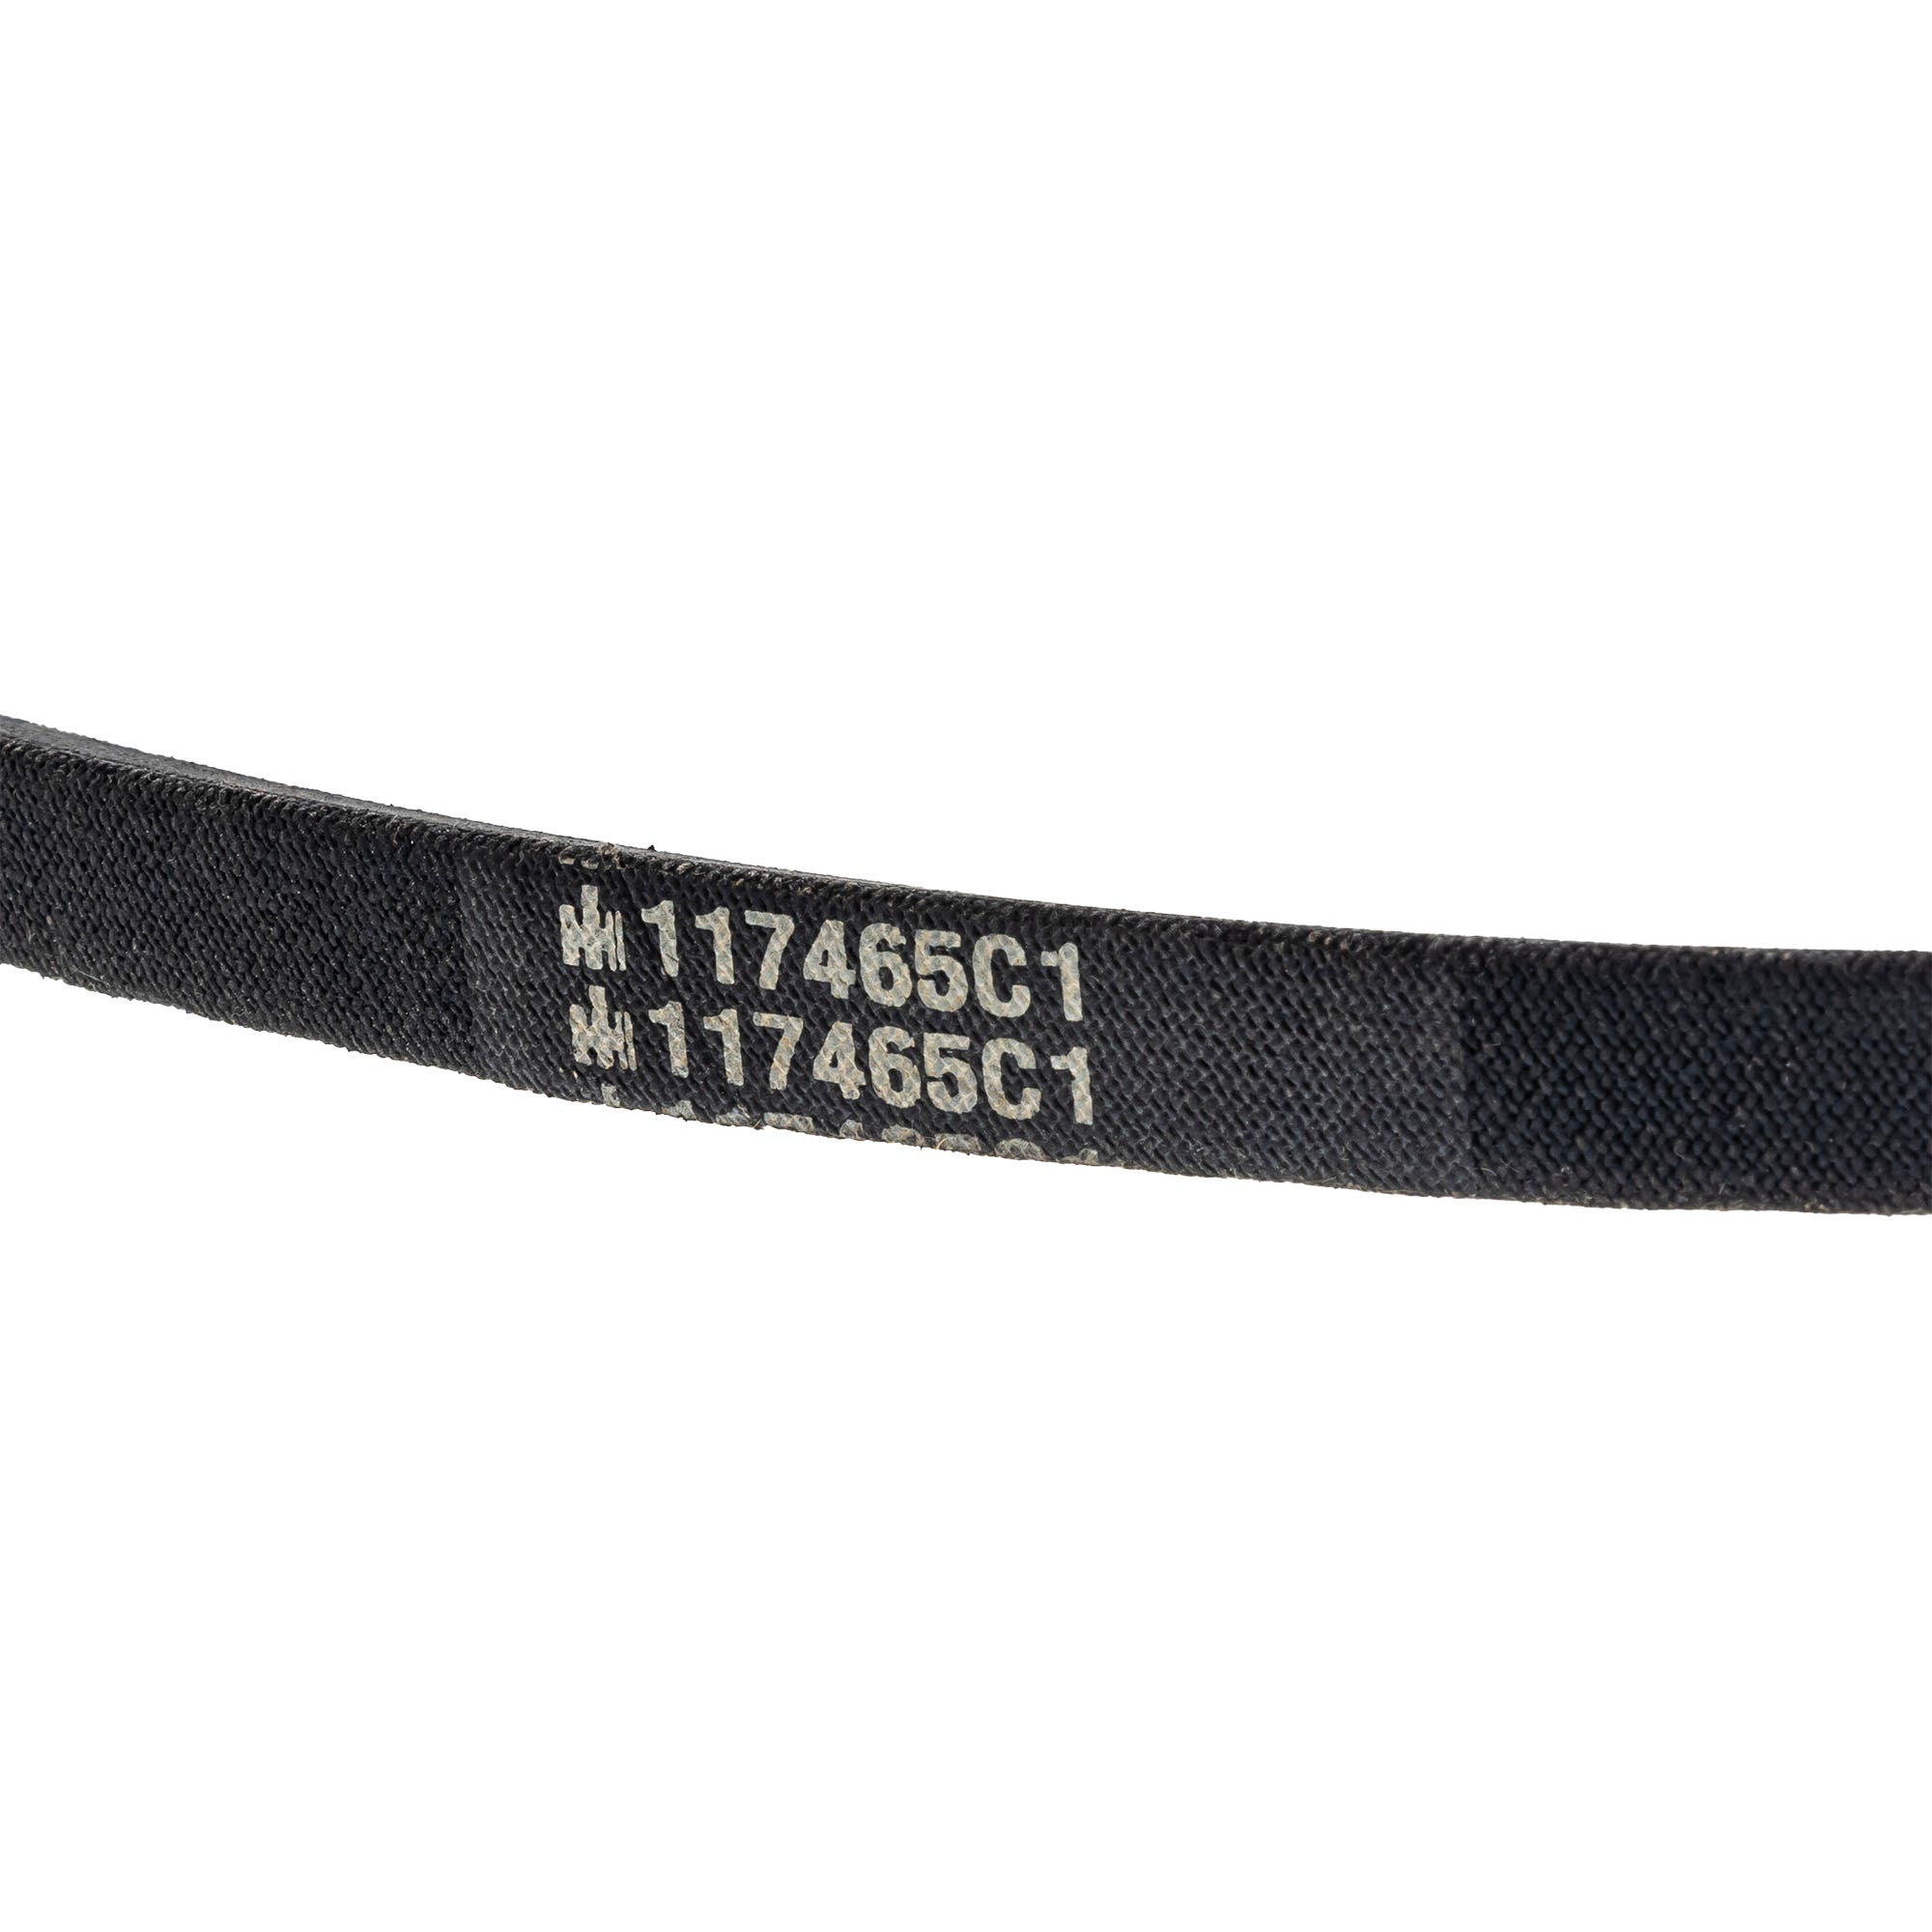 IH-117465-C1  V Belt 3/8 X 79 Sl 44 50 Deck Blade 50A 44A 3